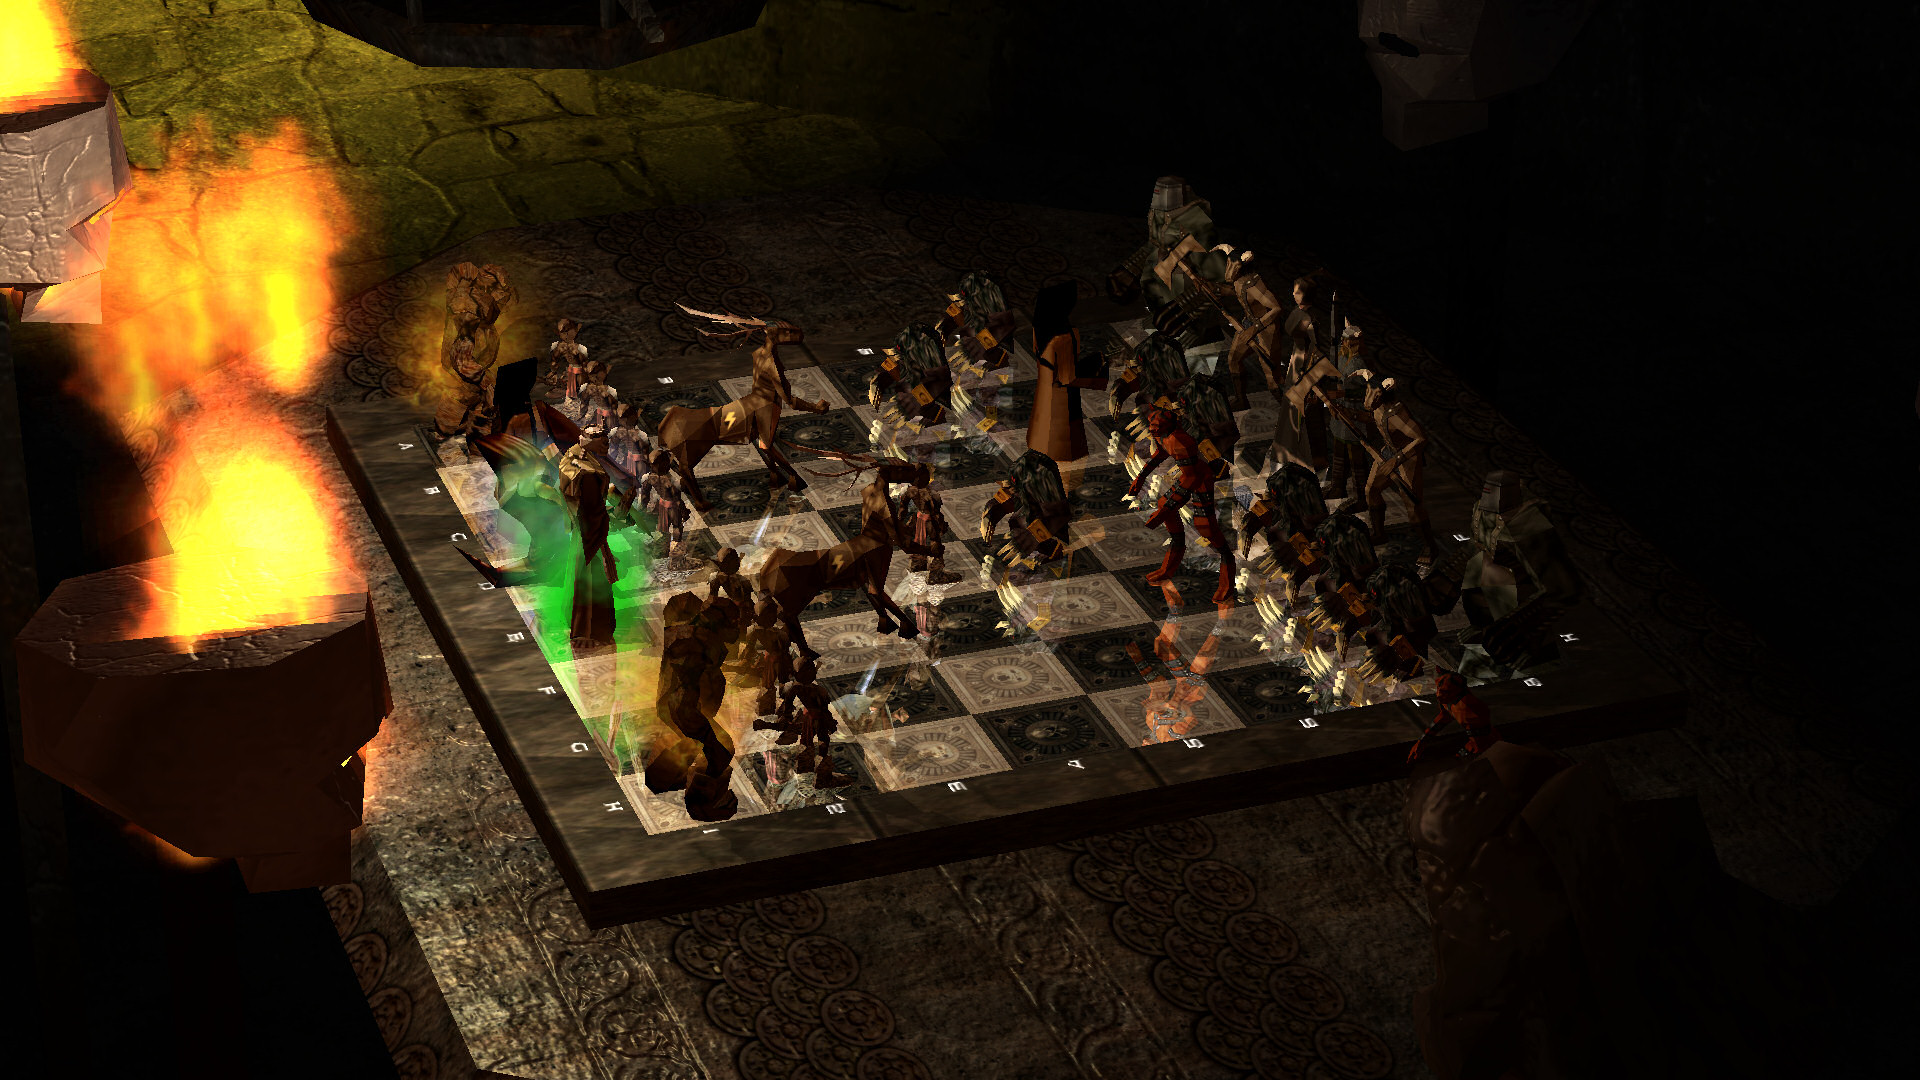 Chess3D on Steam